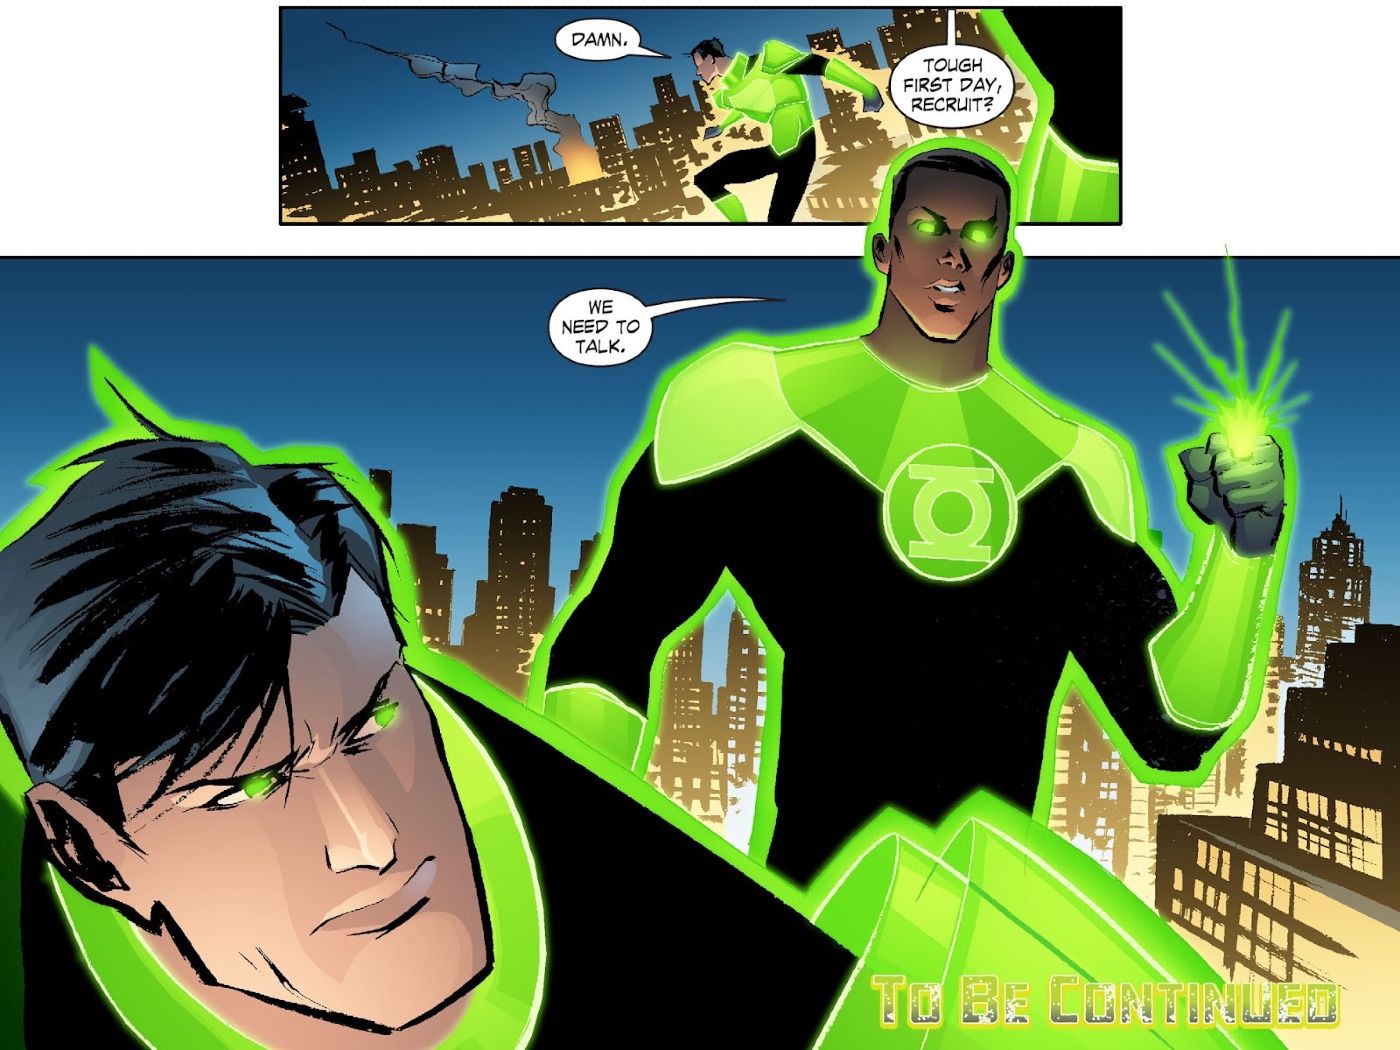 Smallville: Lantern Smallville's, Superman's first meeting with fellow Green Lantern John Stewart